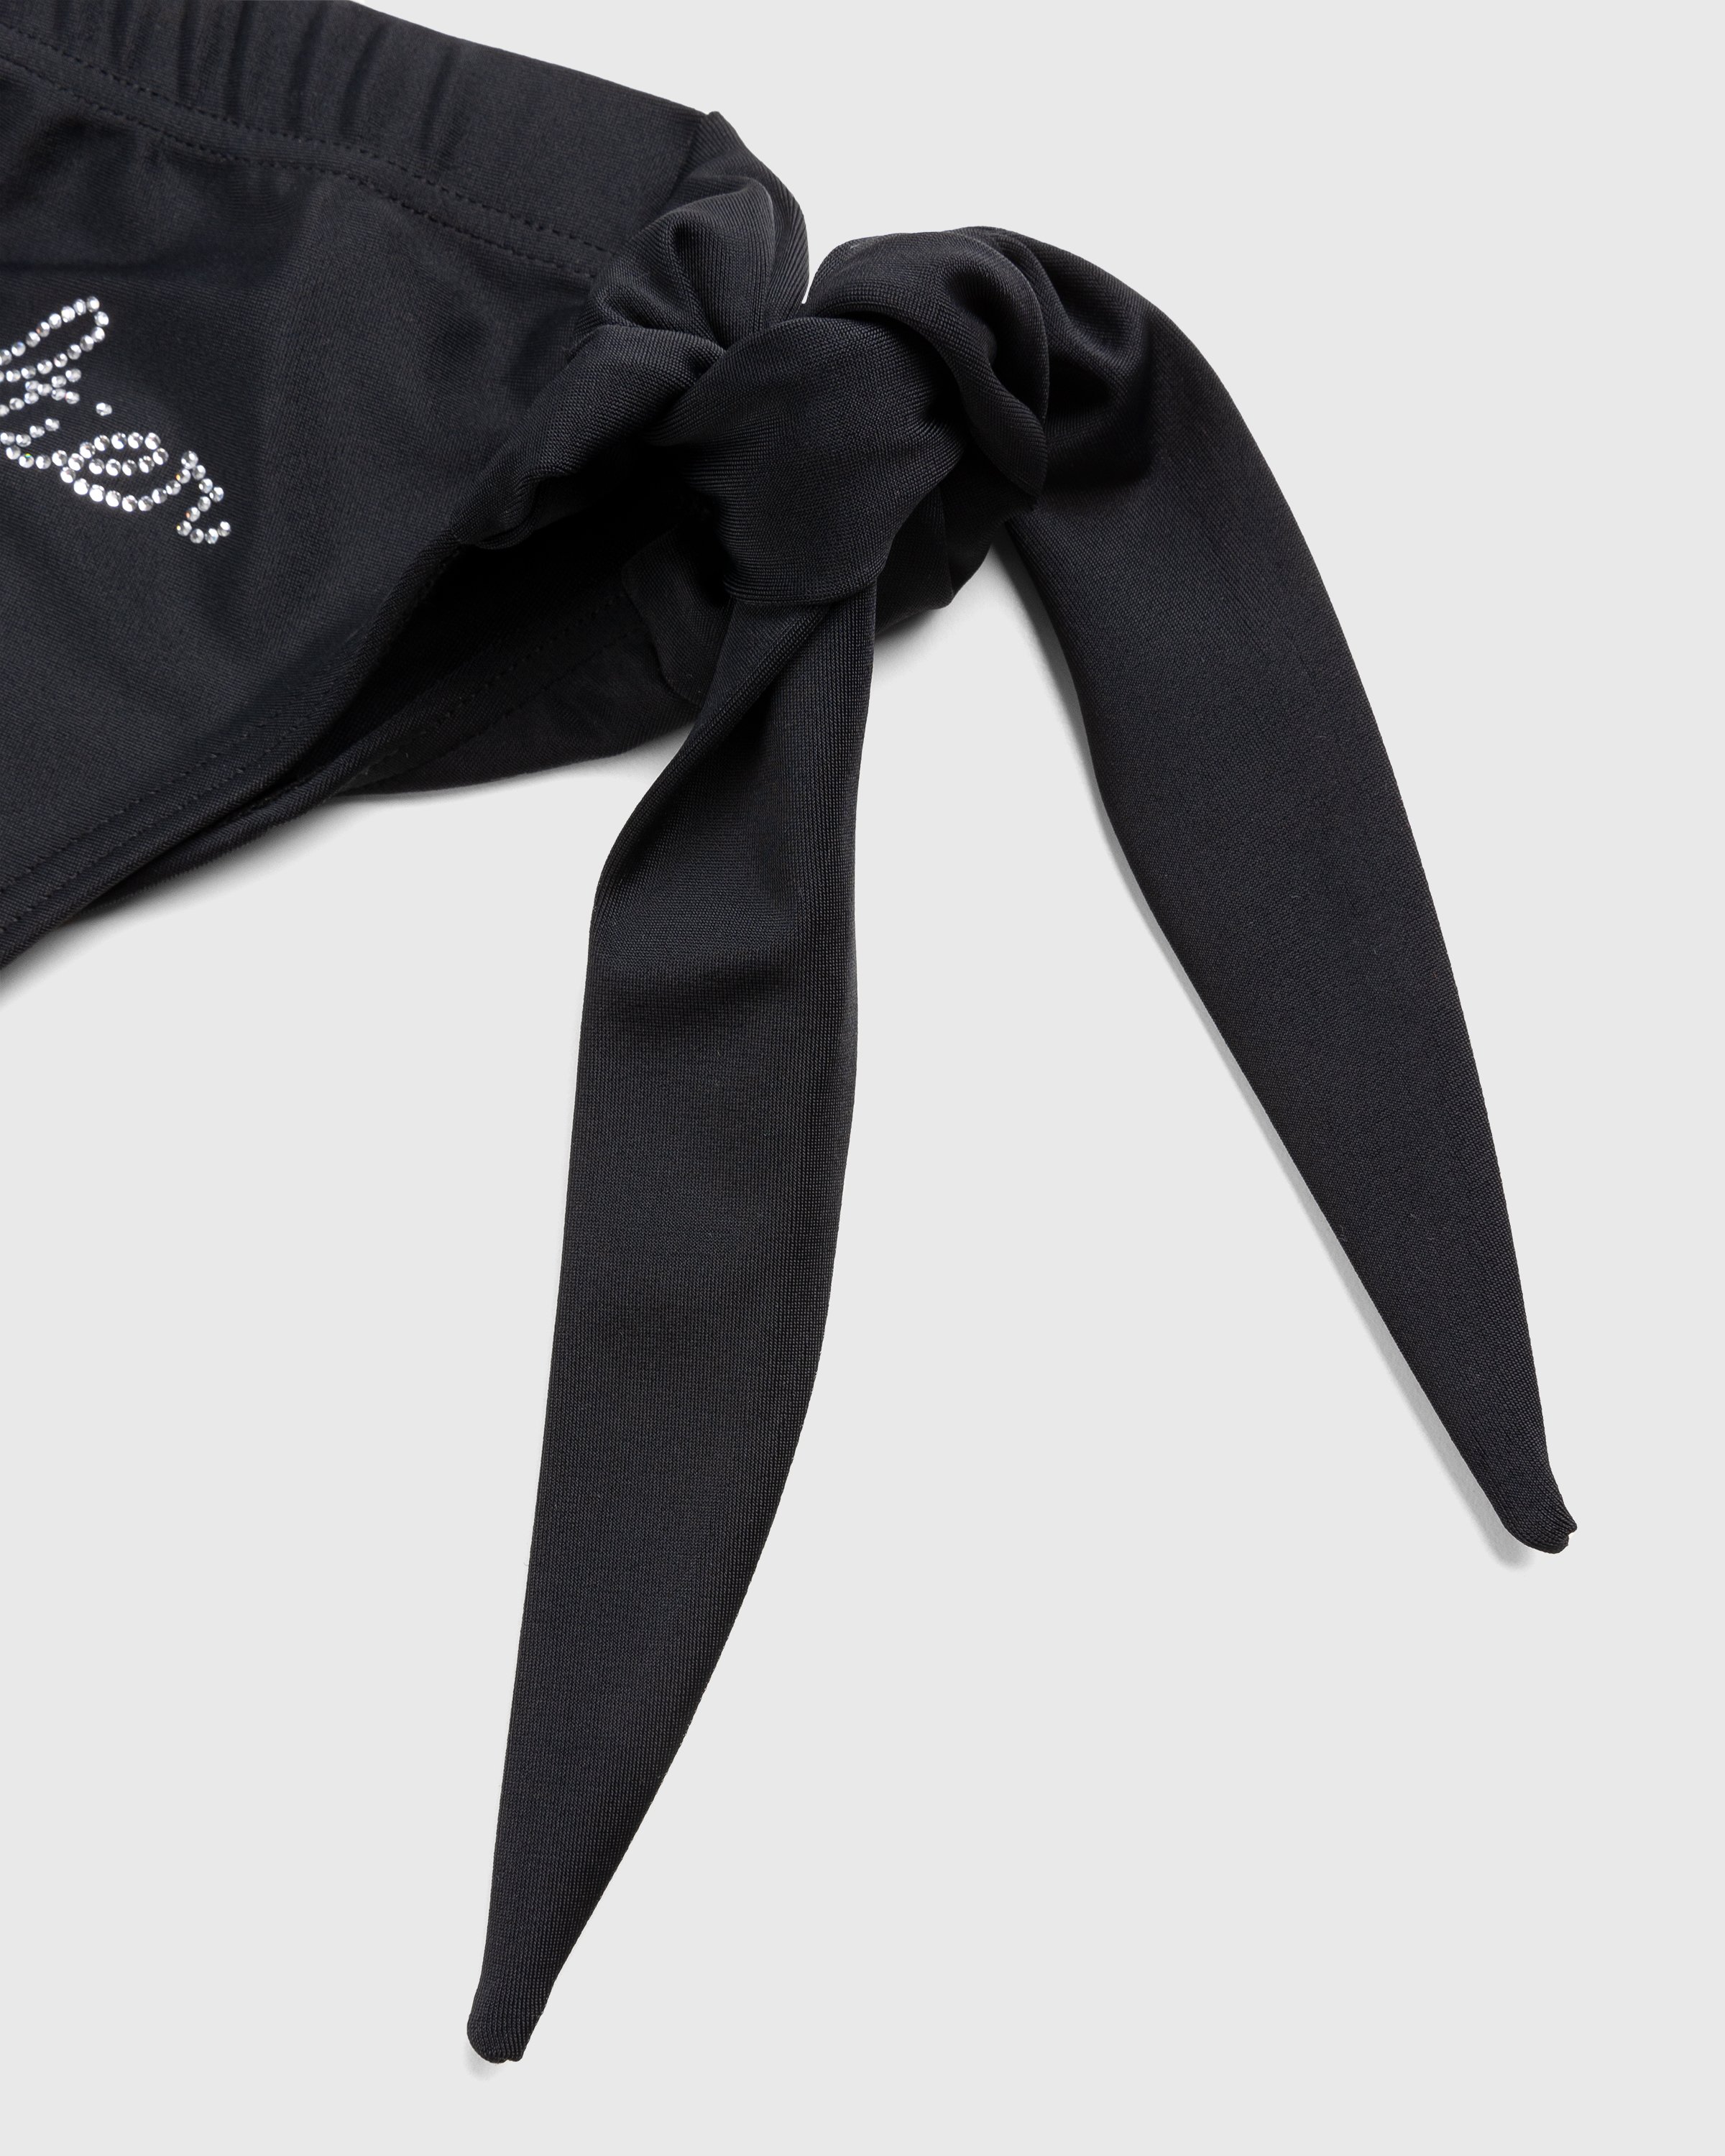 Jean Paul Gaultier - Rhinestone Logo Bikini Bottom Black - Clothing - Black - Image 3